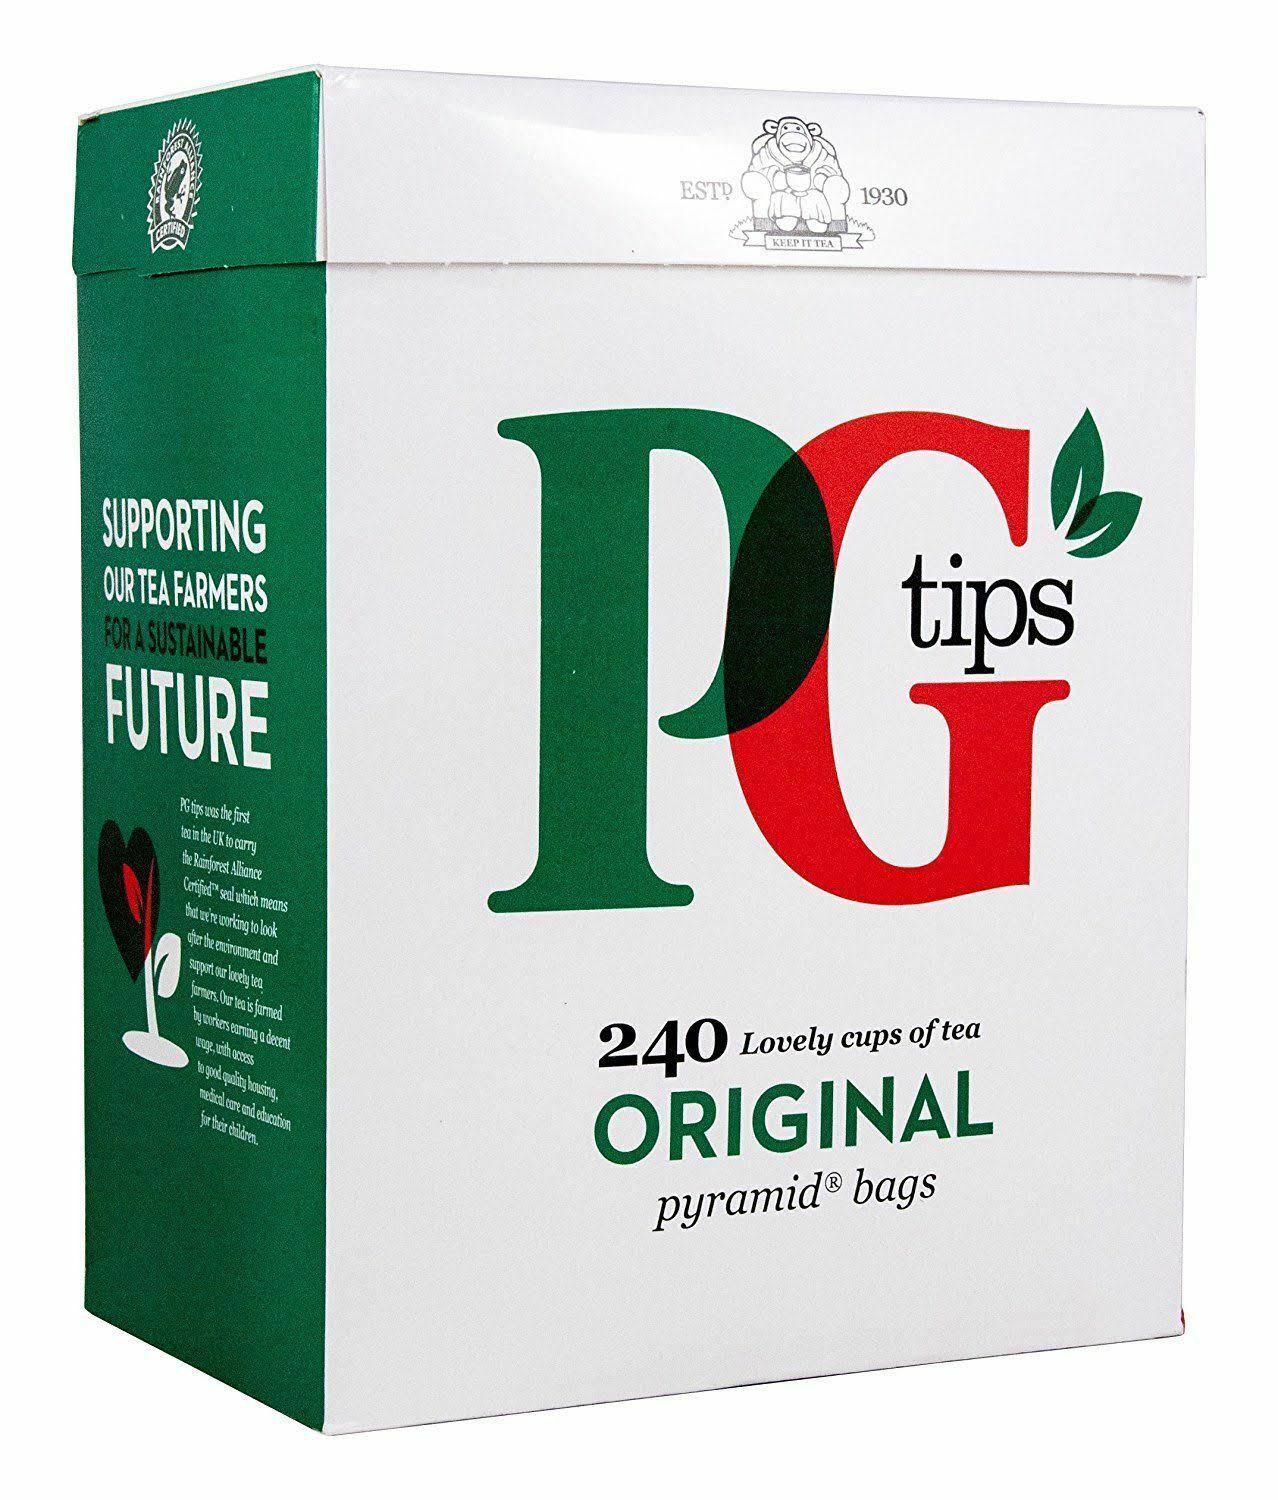 PG Tips Pyramid Tea Bags - 696g, 240ct